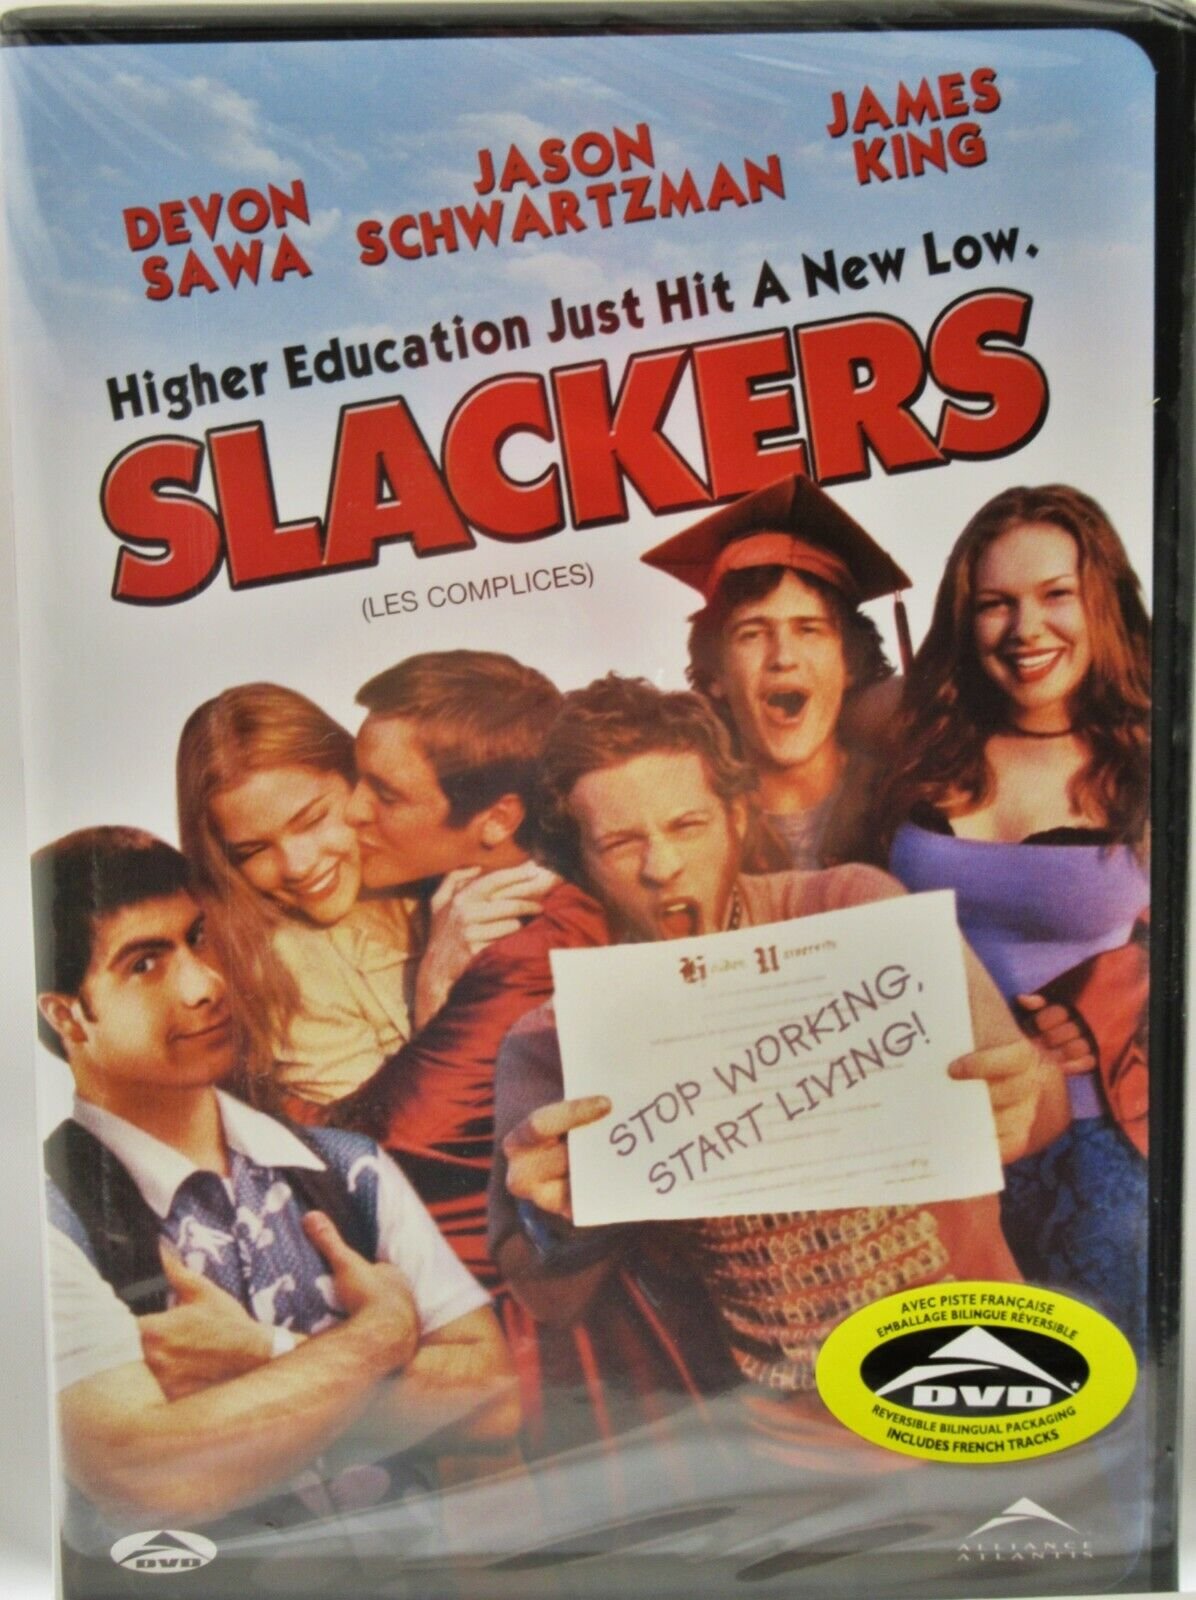 Slackers ~ Devon Sawa Jason Schwartzman James King ~ Movie Film ~ New DVD